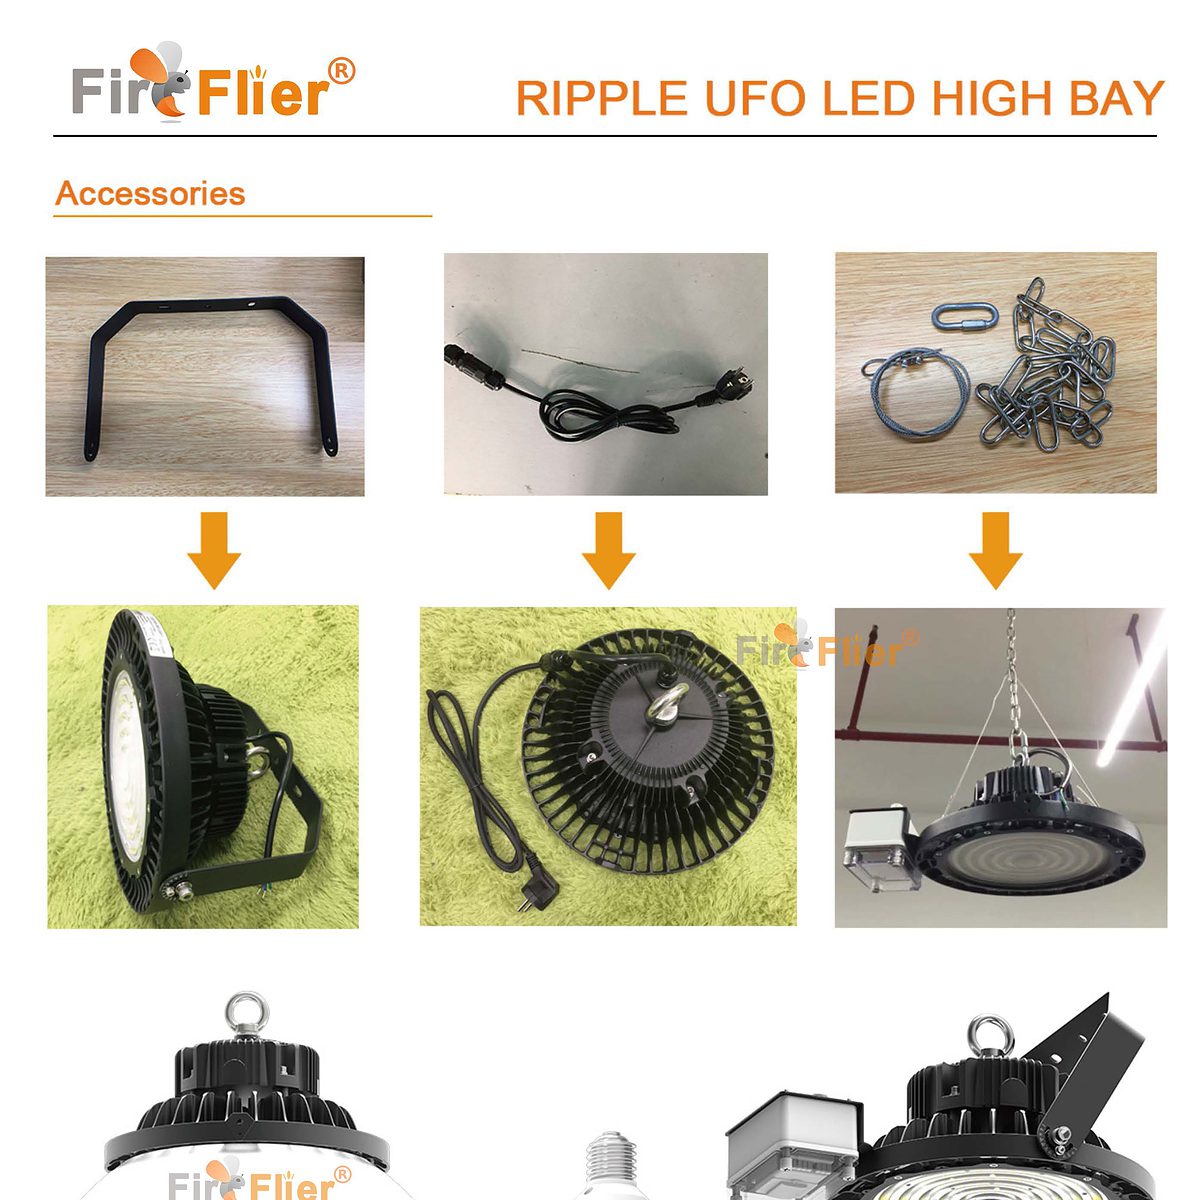 Ripple UFO LED High Bay Scheda tecnica